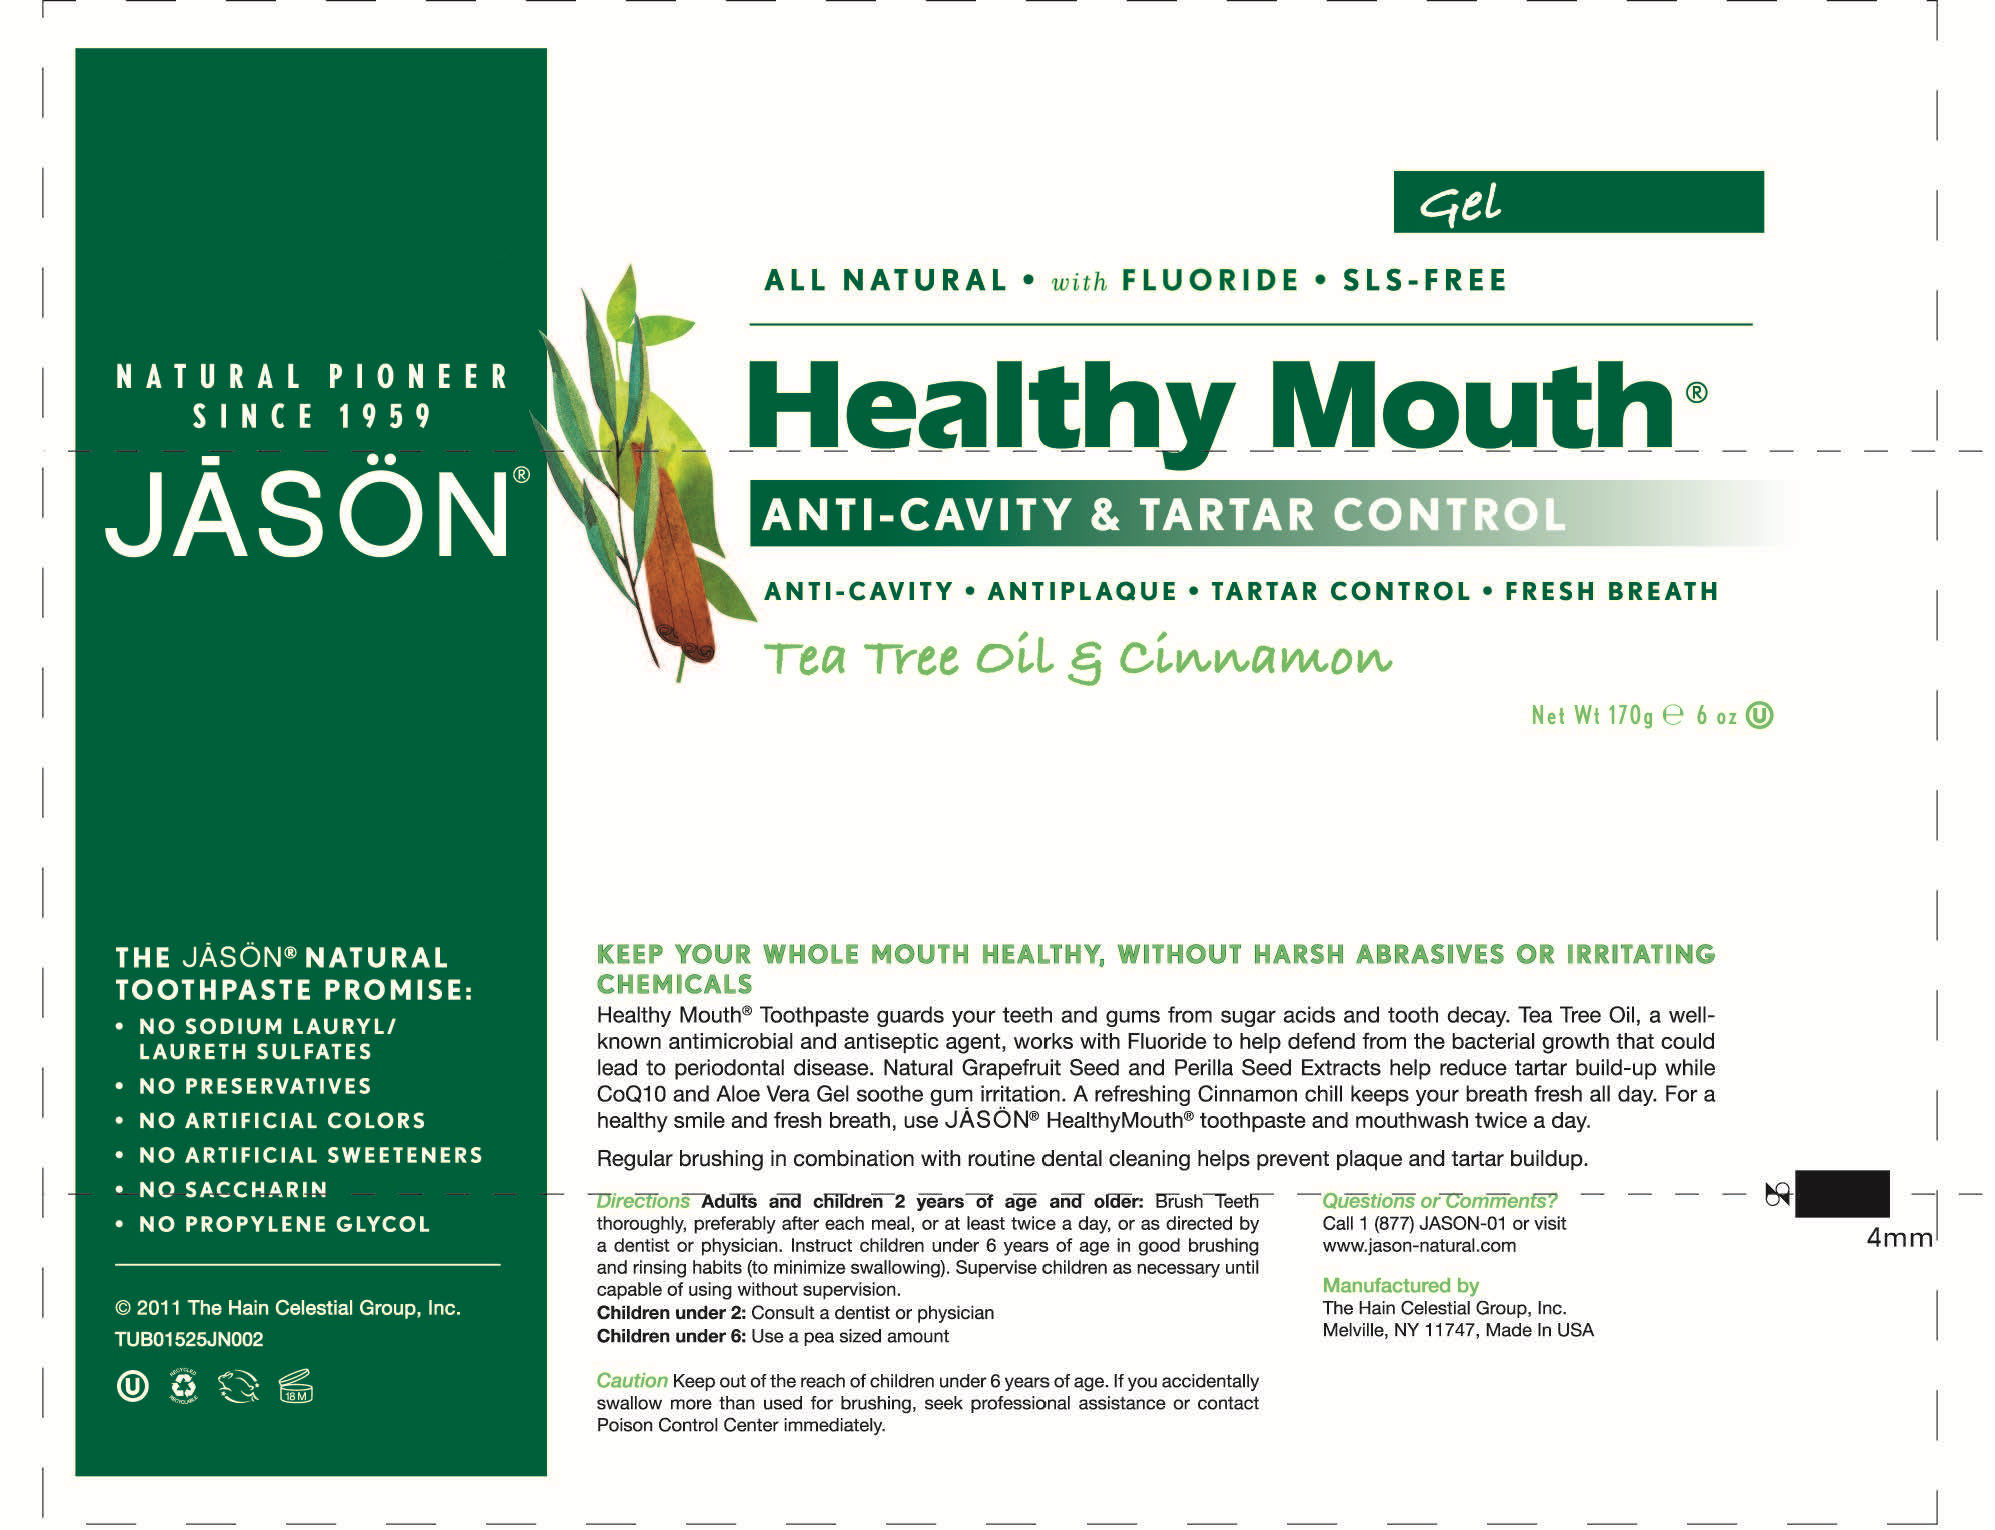 Jason Healthy Mouth Anticavity ,Tartar Control Tea Tree Oil and Cinnamon